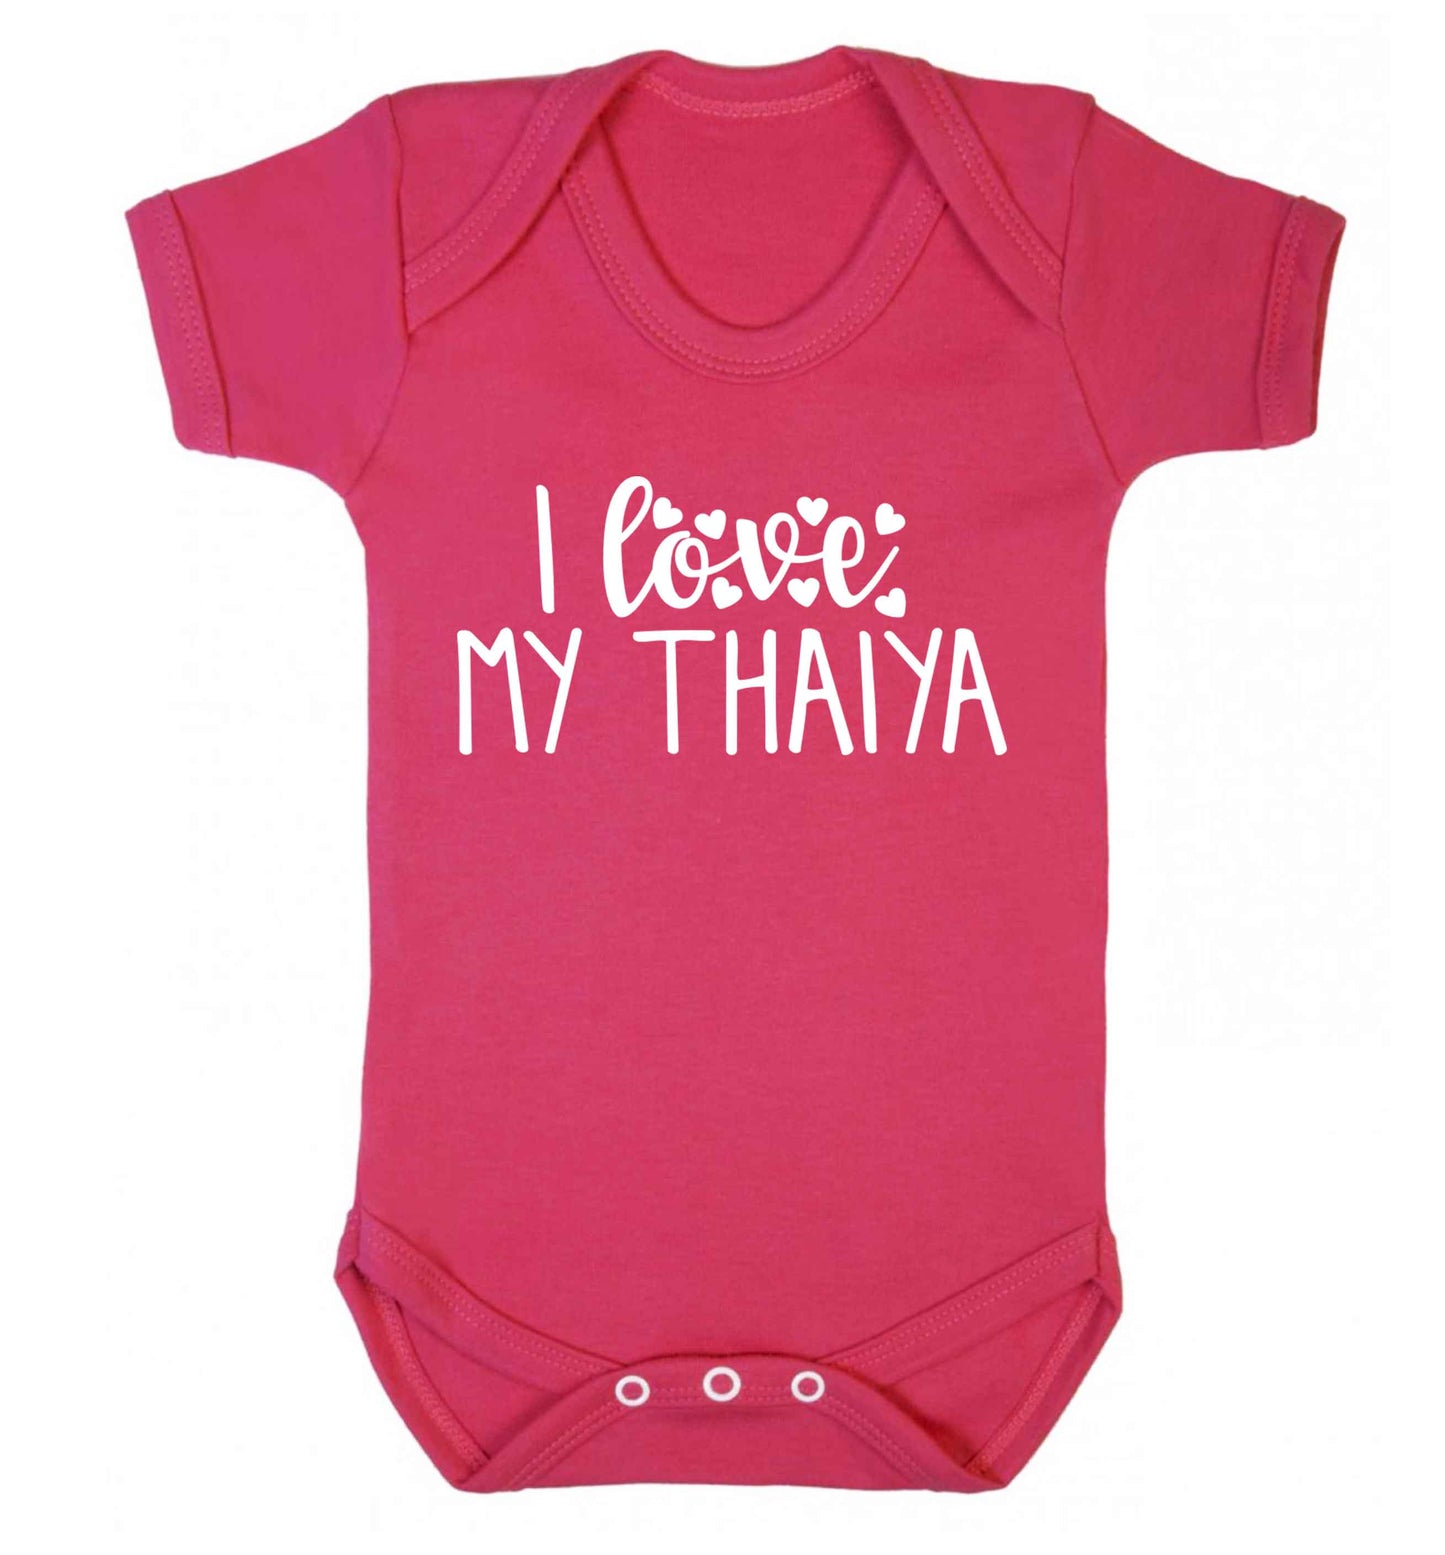 I love my thaiya Baby Vest dark pink 18-24 months